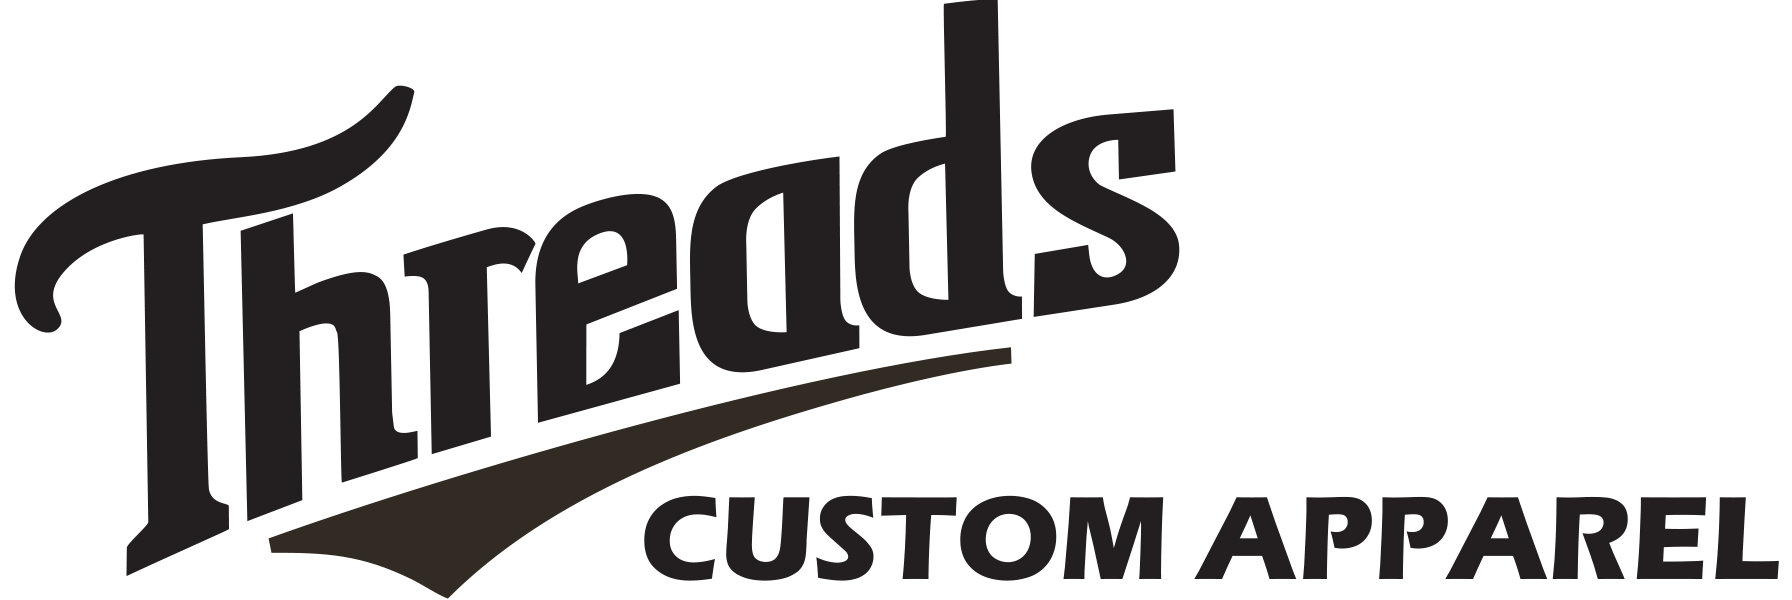 Threads Custom Apparel's Logo